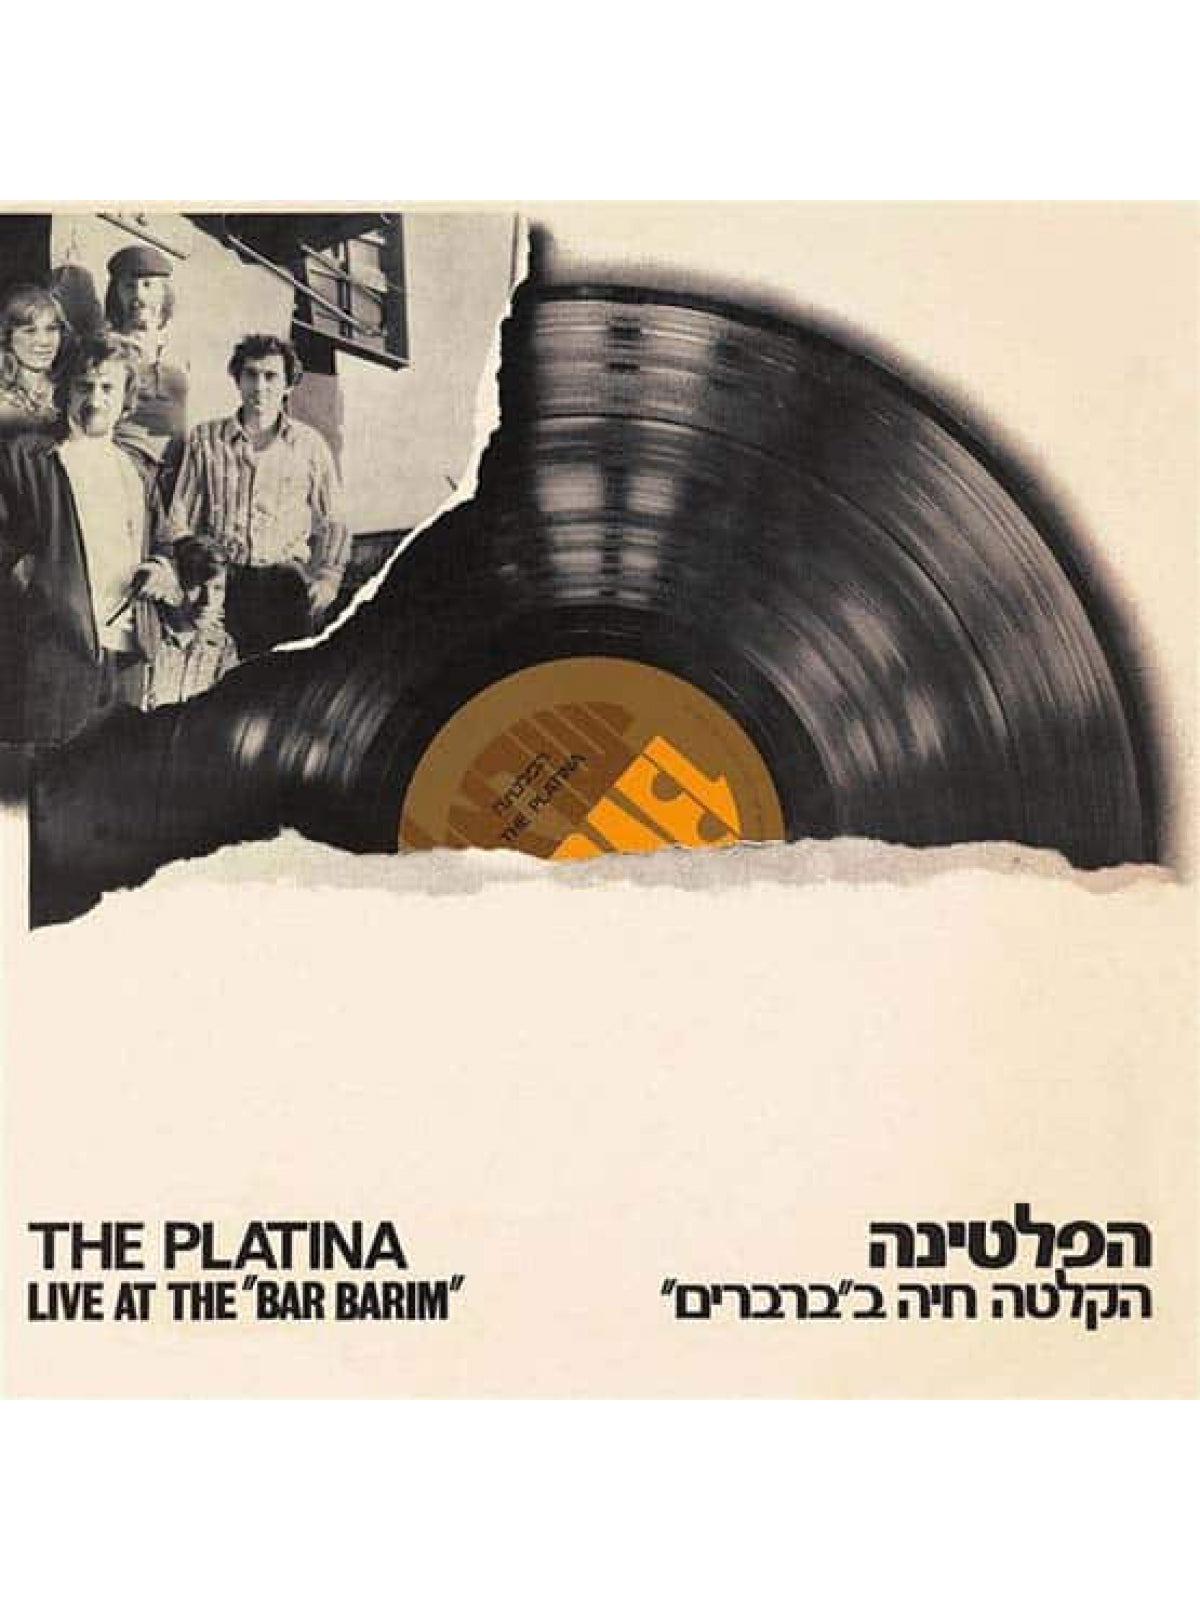 THE PLATINA LIVE RECORDING AT BERBER RECORD